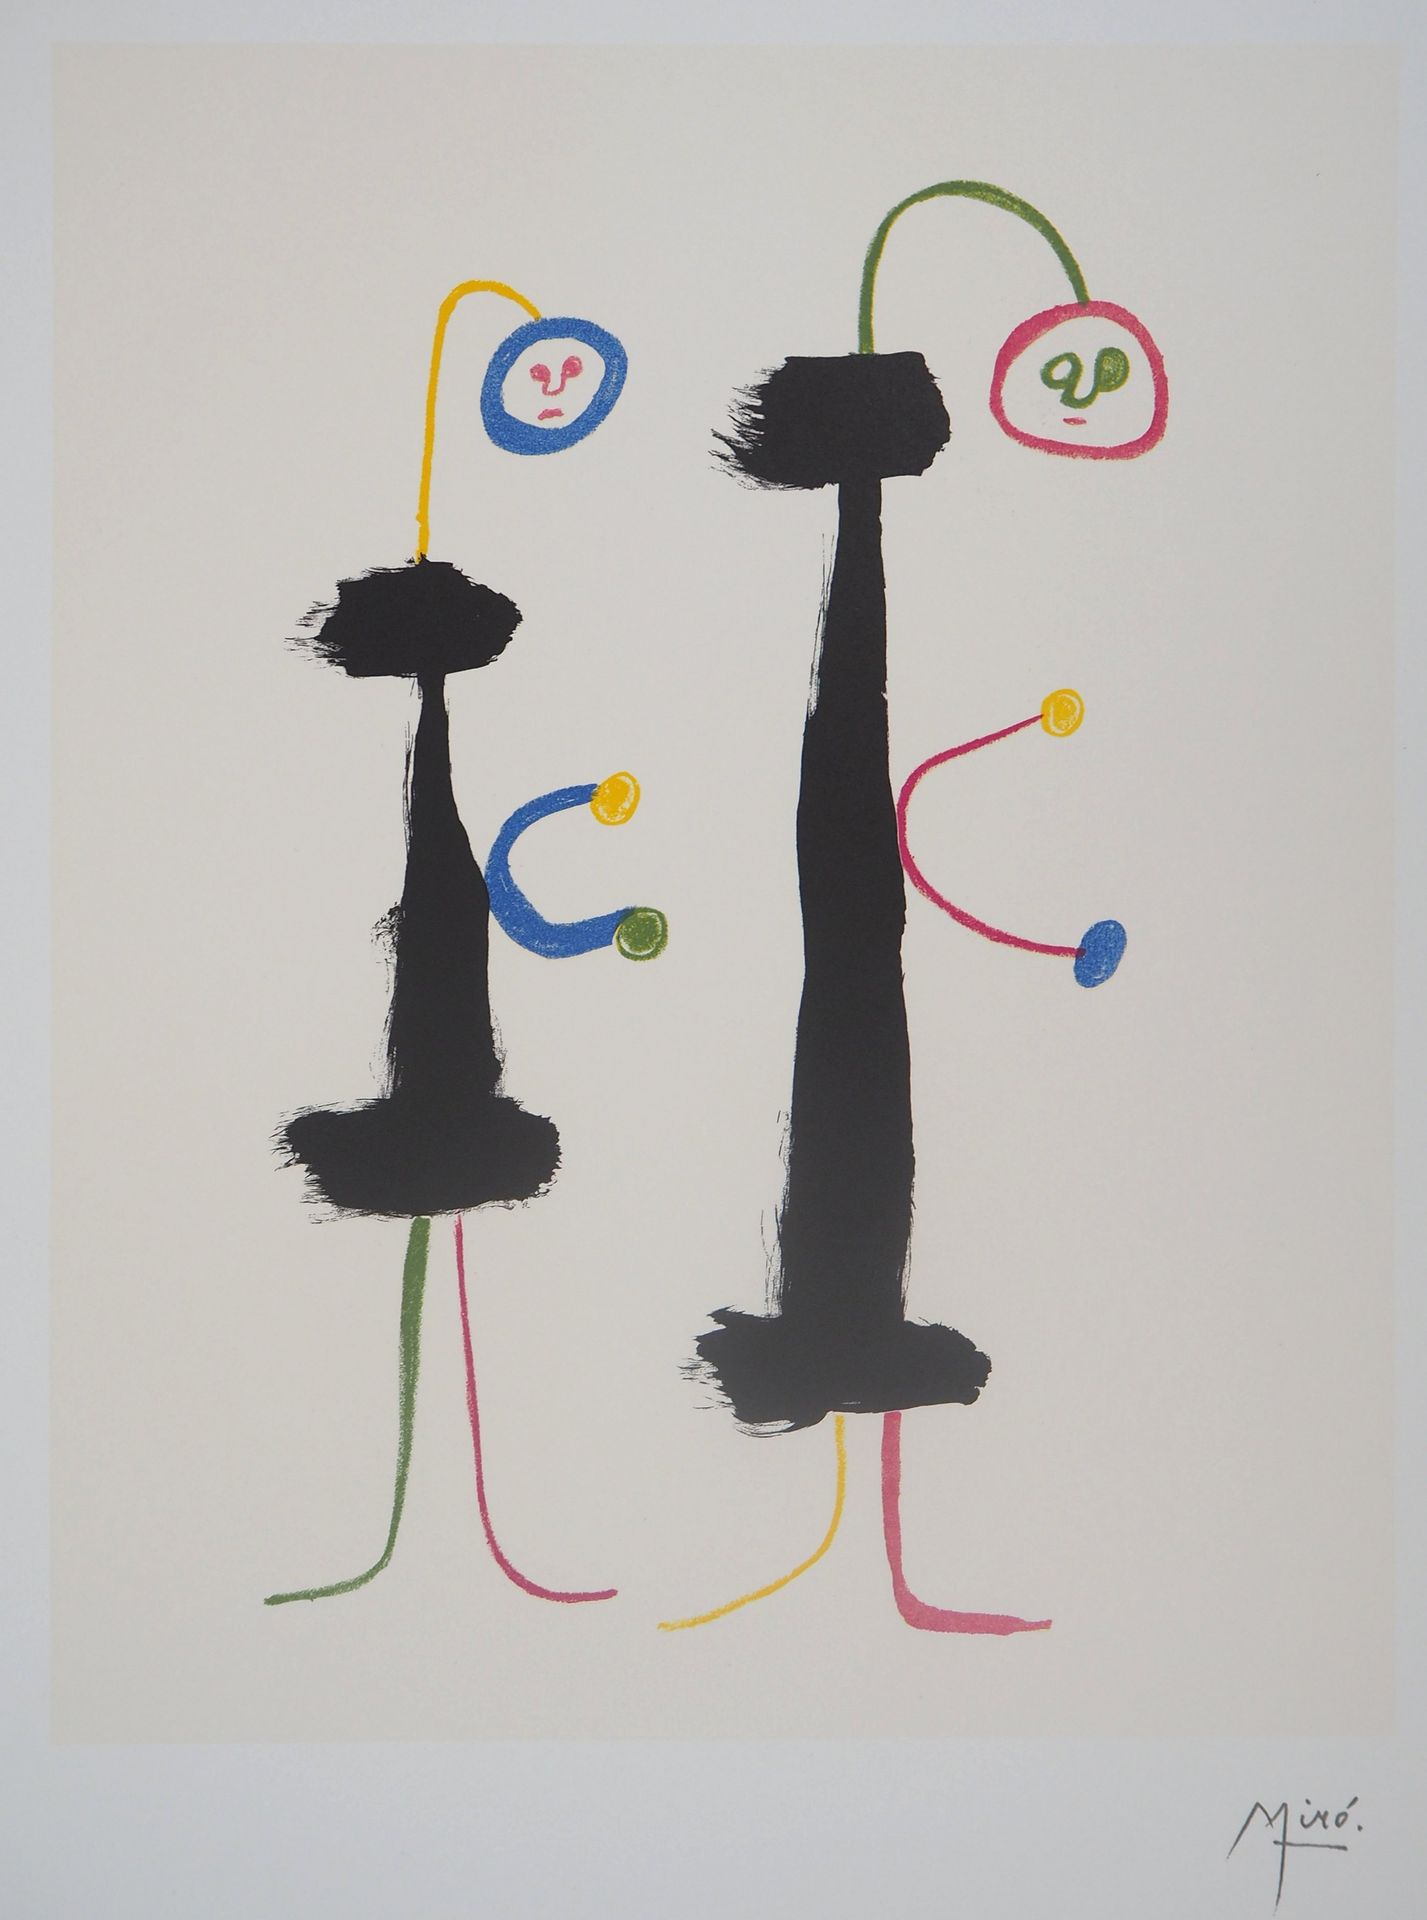 Joan Miro 琼-米罗(1893-1983)(后)

恋爱中的超现实主义夫妇

彩色石版画

板块中的签名

60 x 45厘米，牛皮纸

在Arte（巴&hellip;